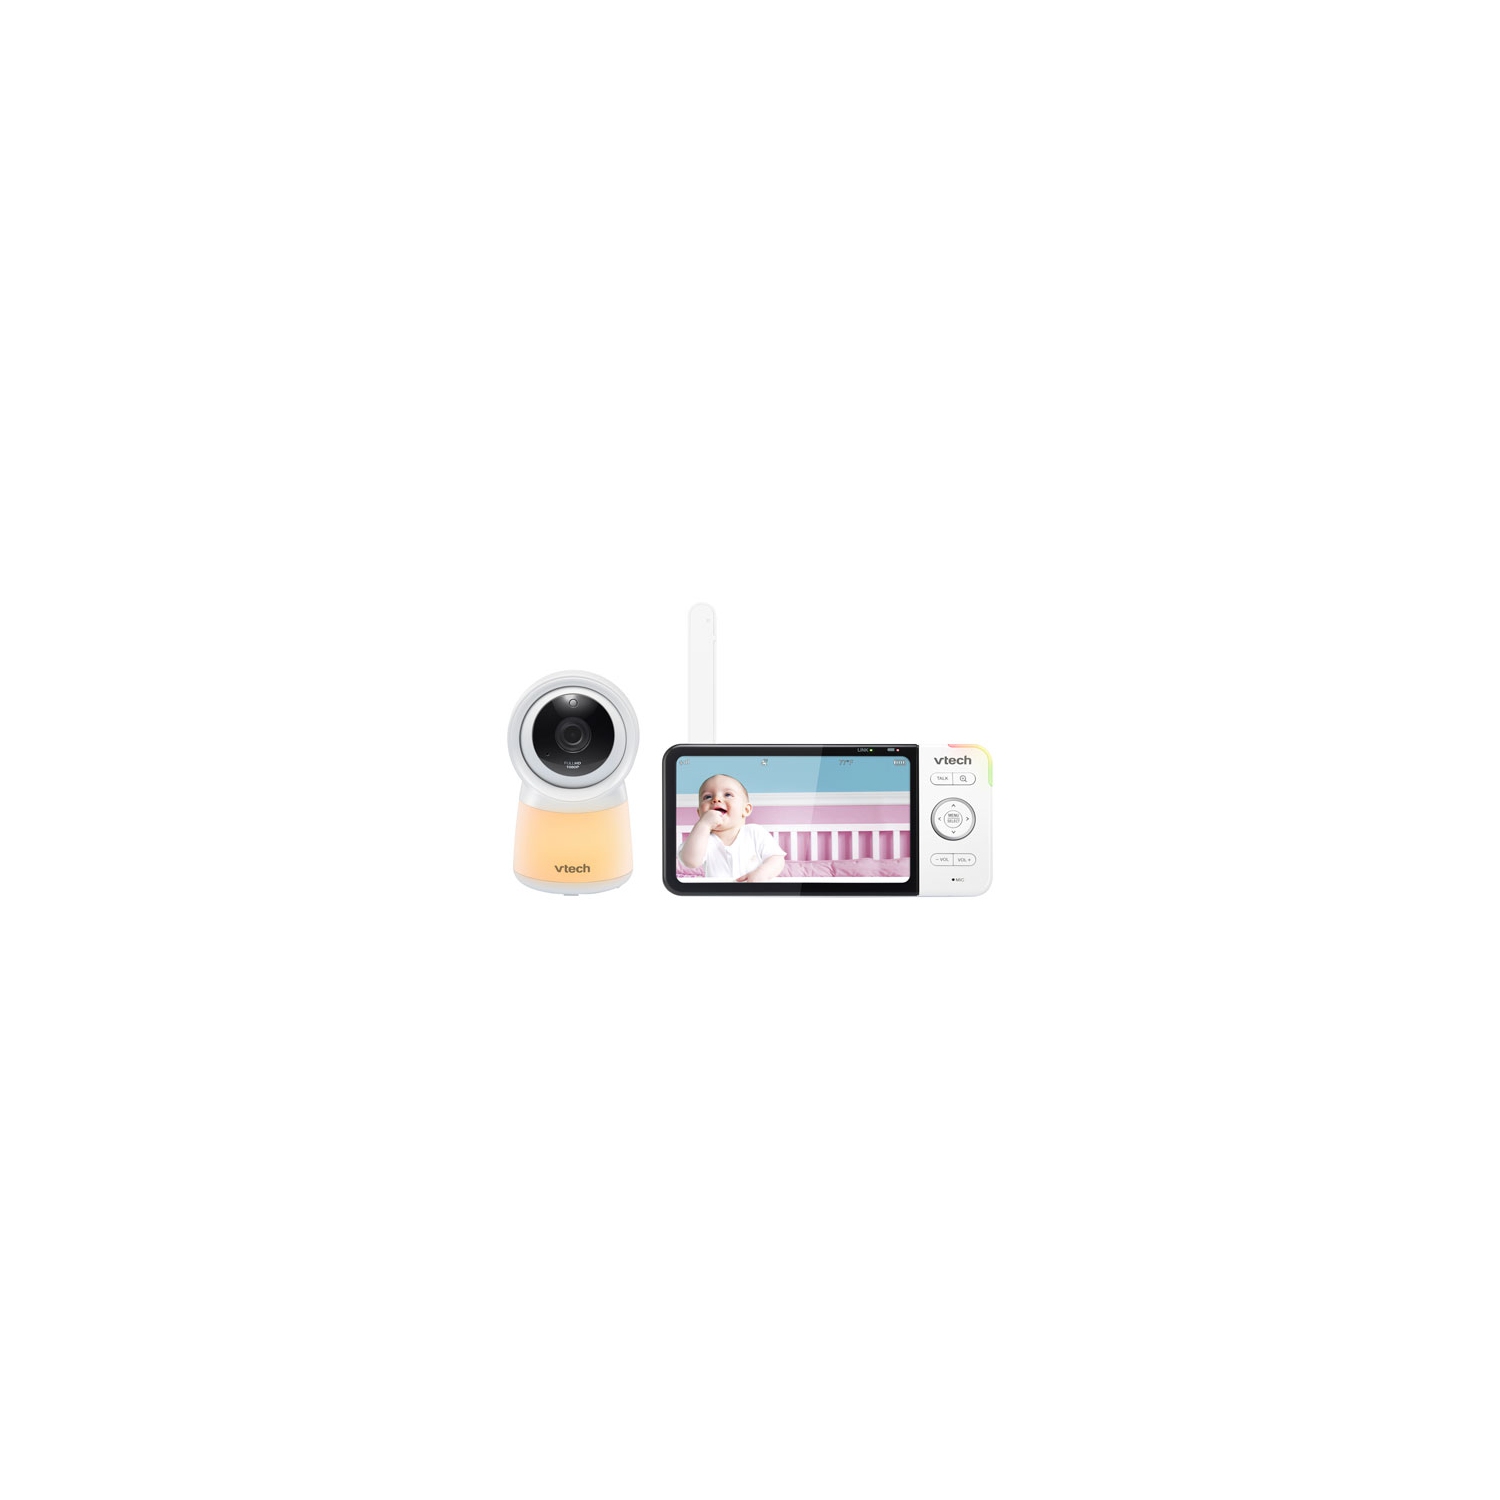 Refurbished (Good) - VTech 5" Video Baby Monitor with Night Light, Night Vison & Two-Way Audio (RM5754HD)